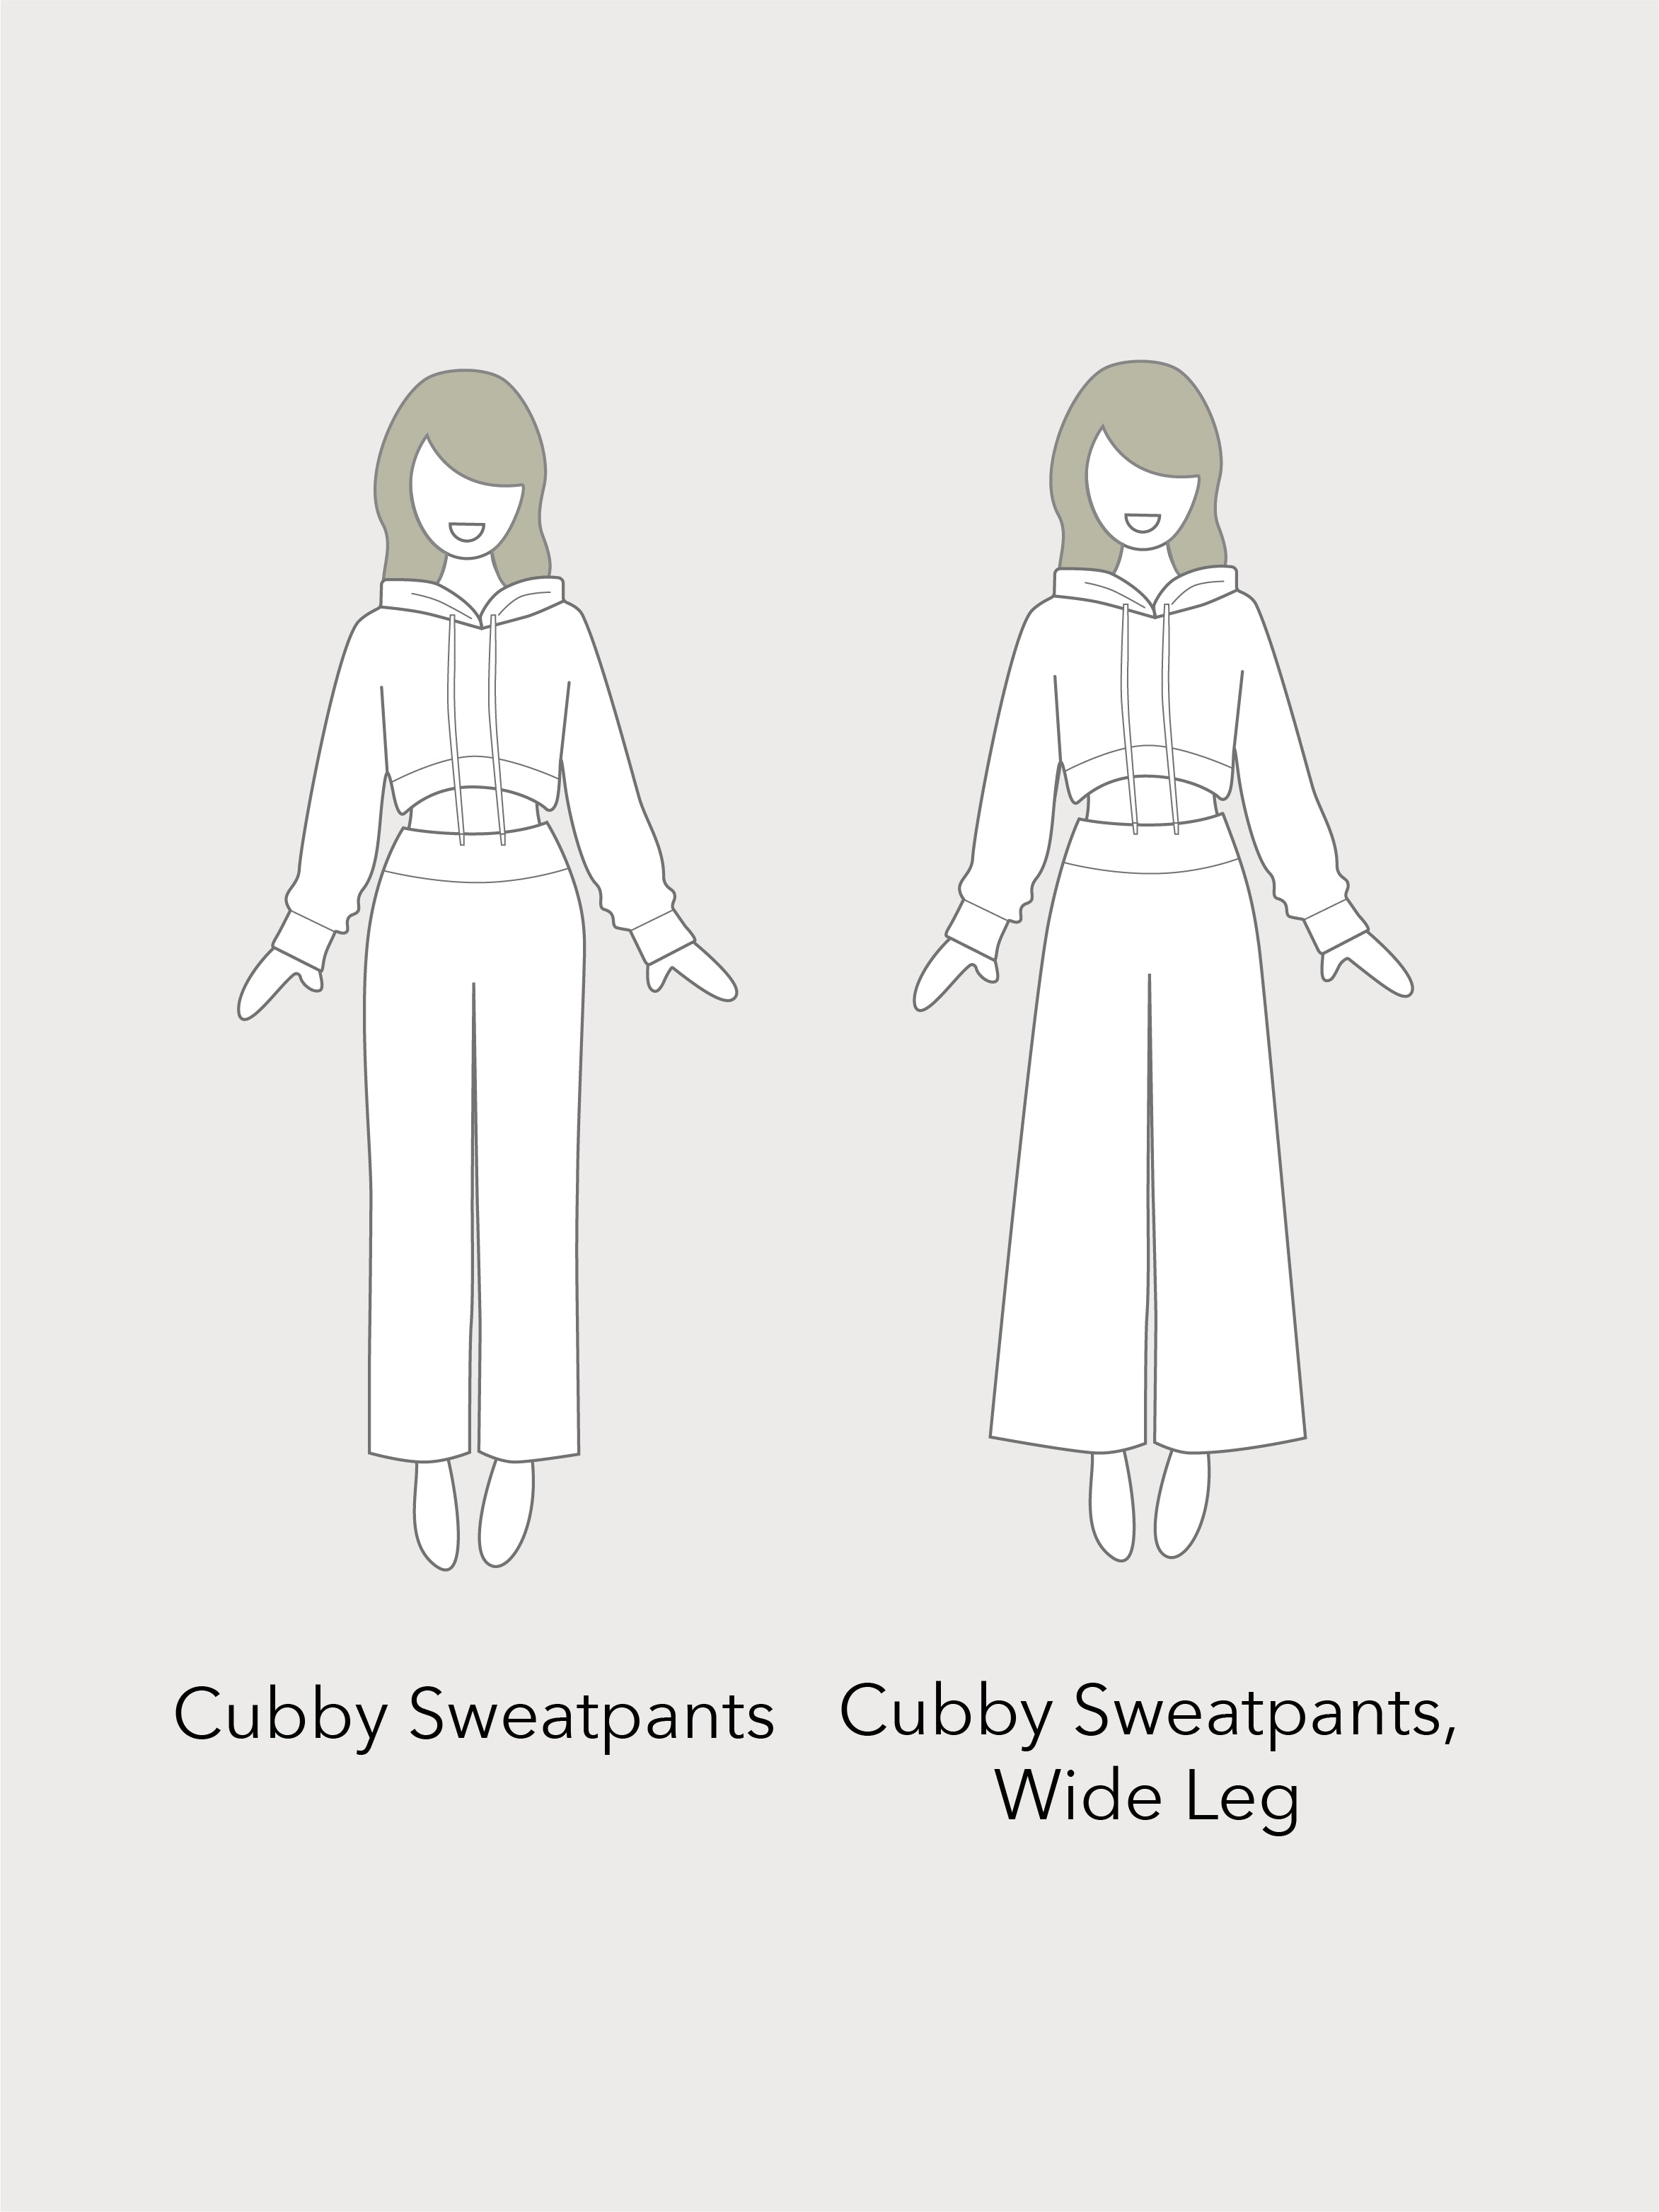 Cubby Sweatpants, Wide Leg